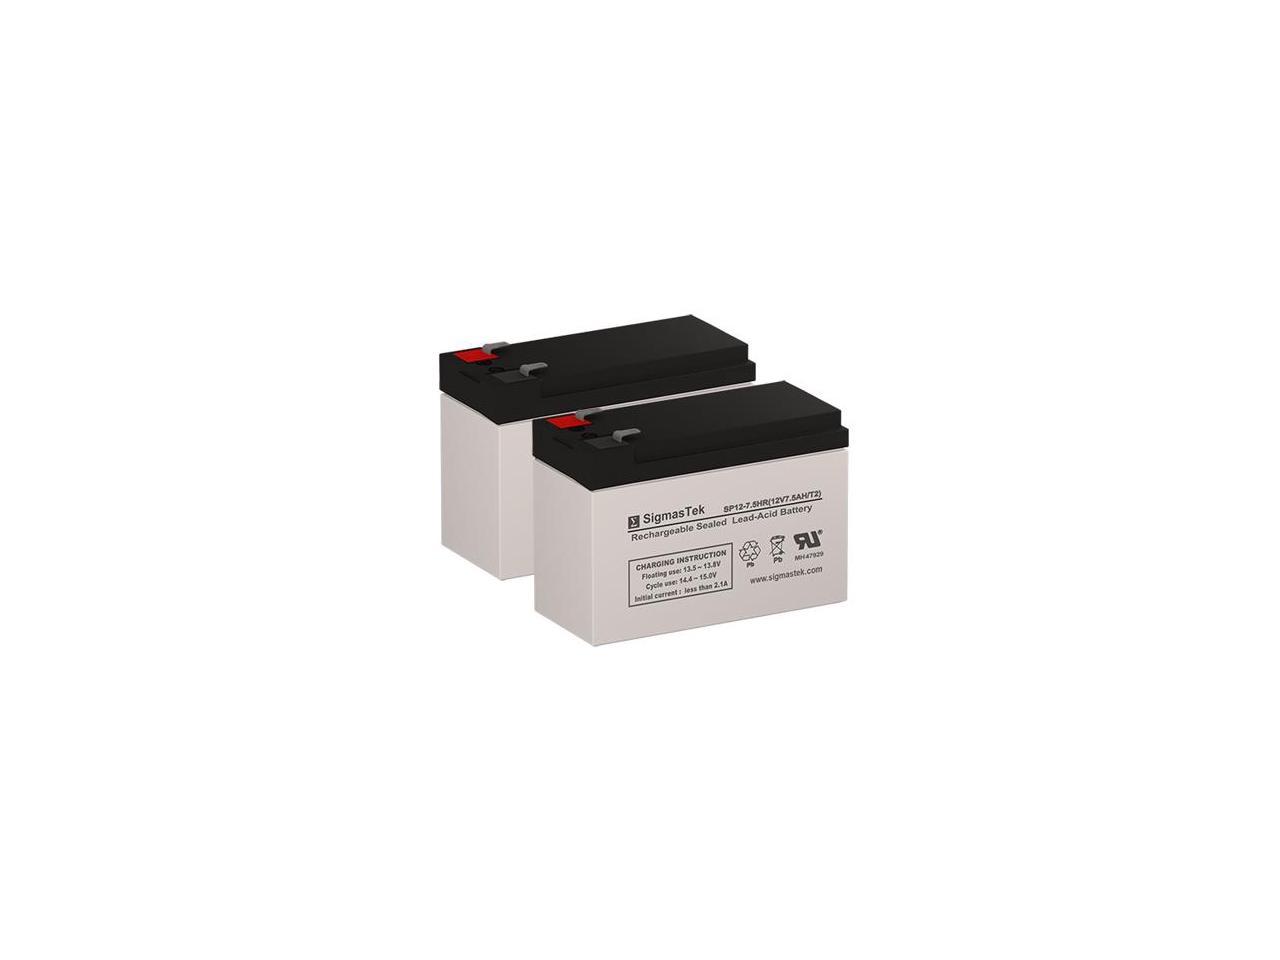 SigmasTek RBC123 Replacement Batteries - Newegg.com